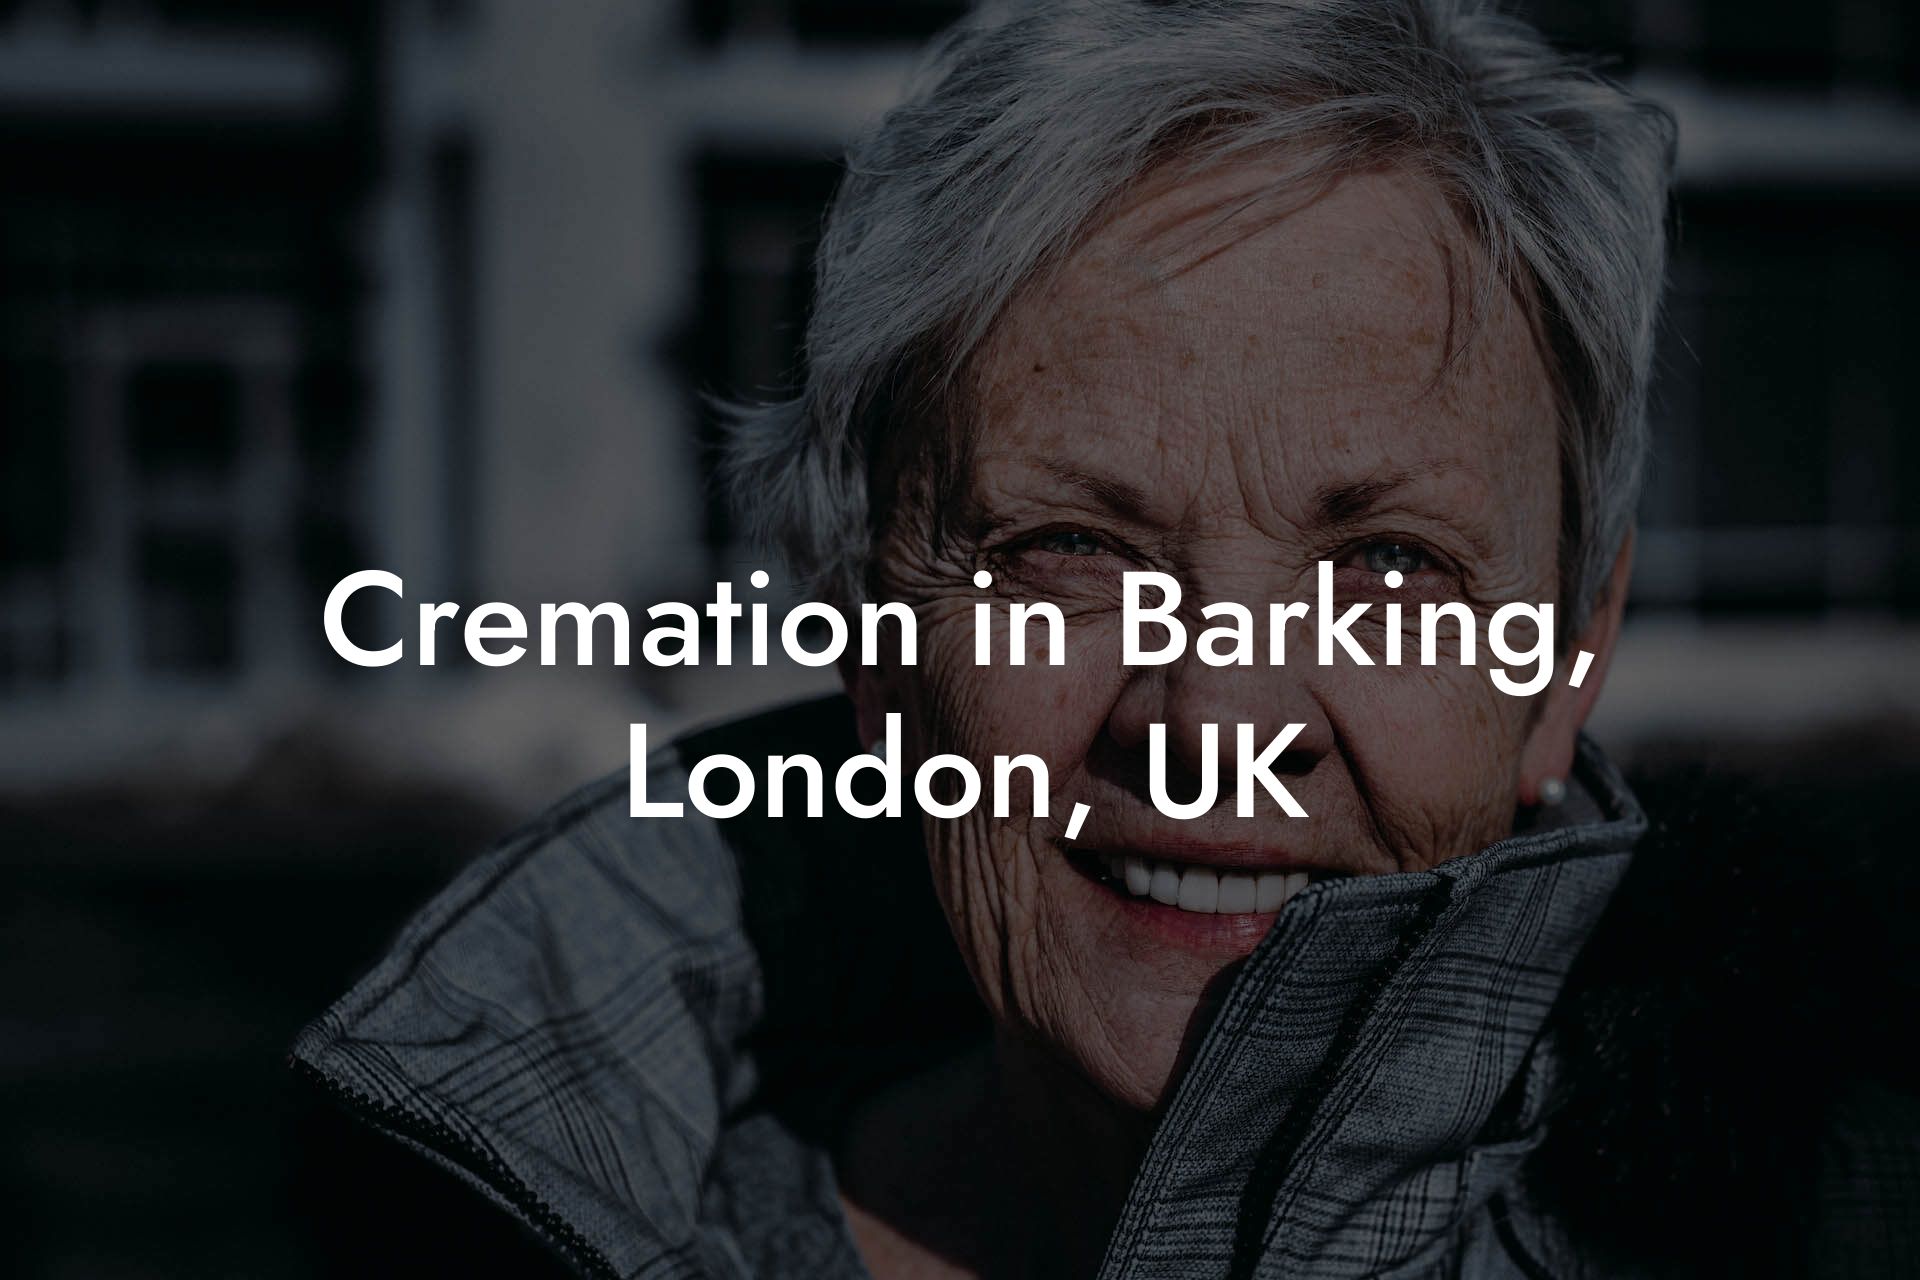 Cremation in Barking, London, UK